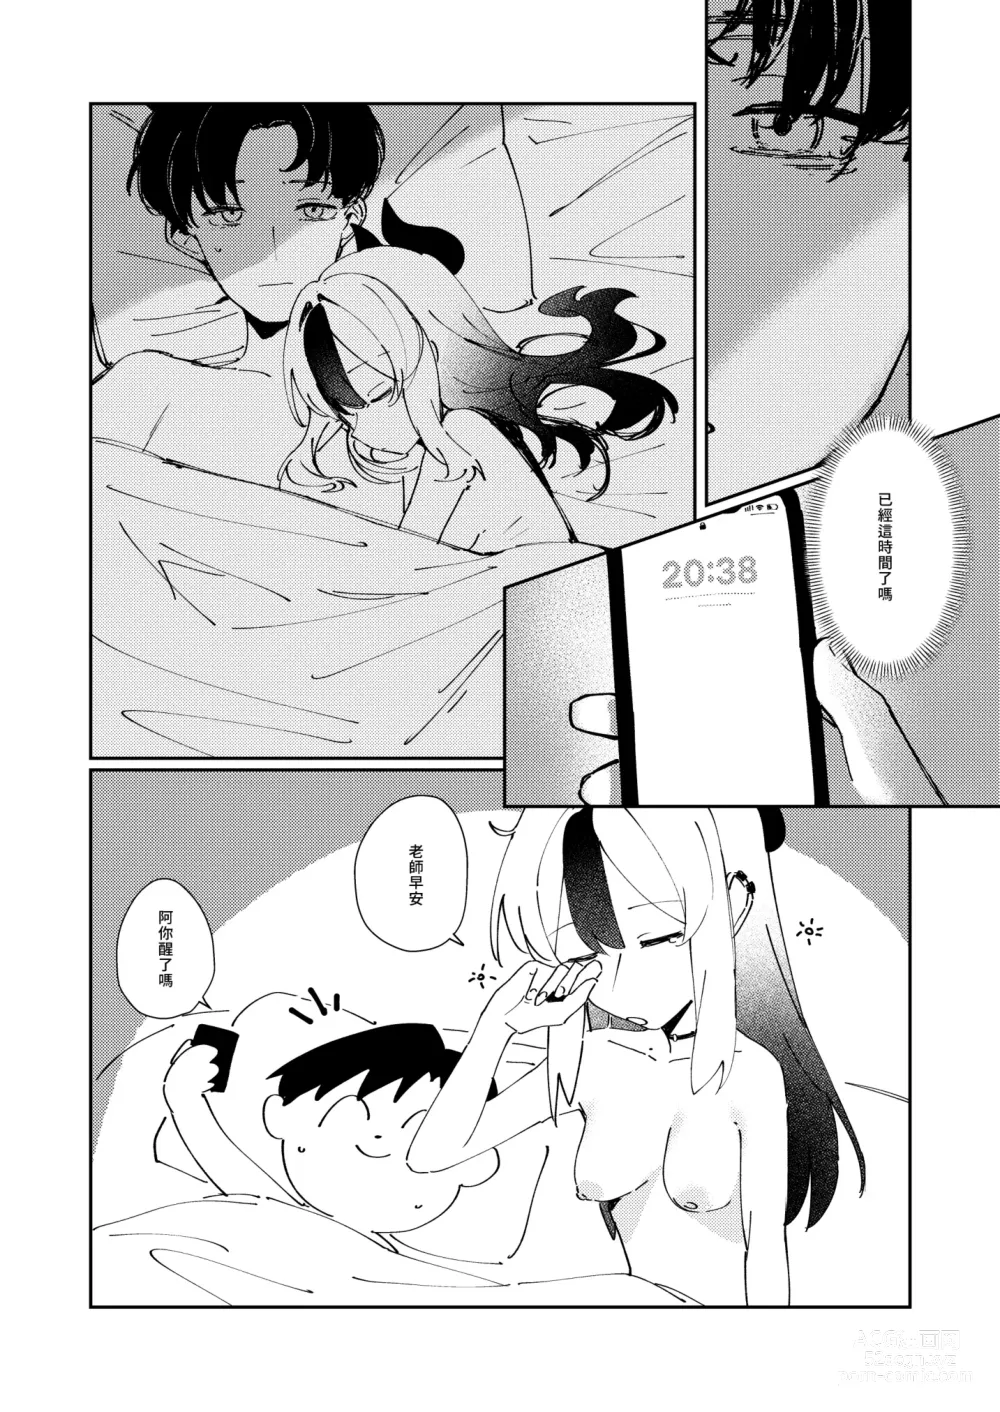 Page 28 of doujinshi 簡直就像戀人一樣